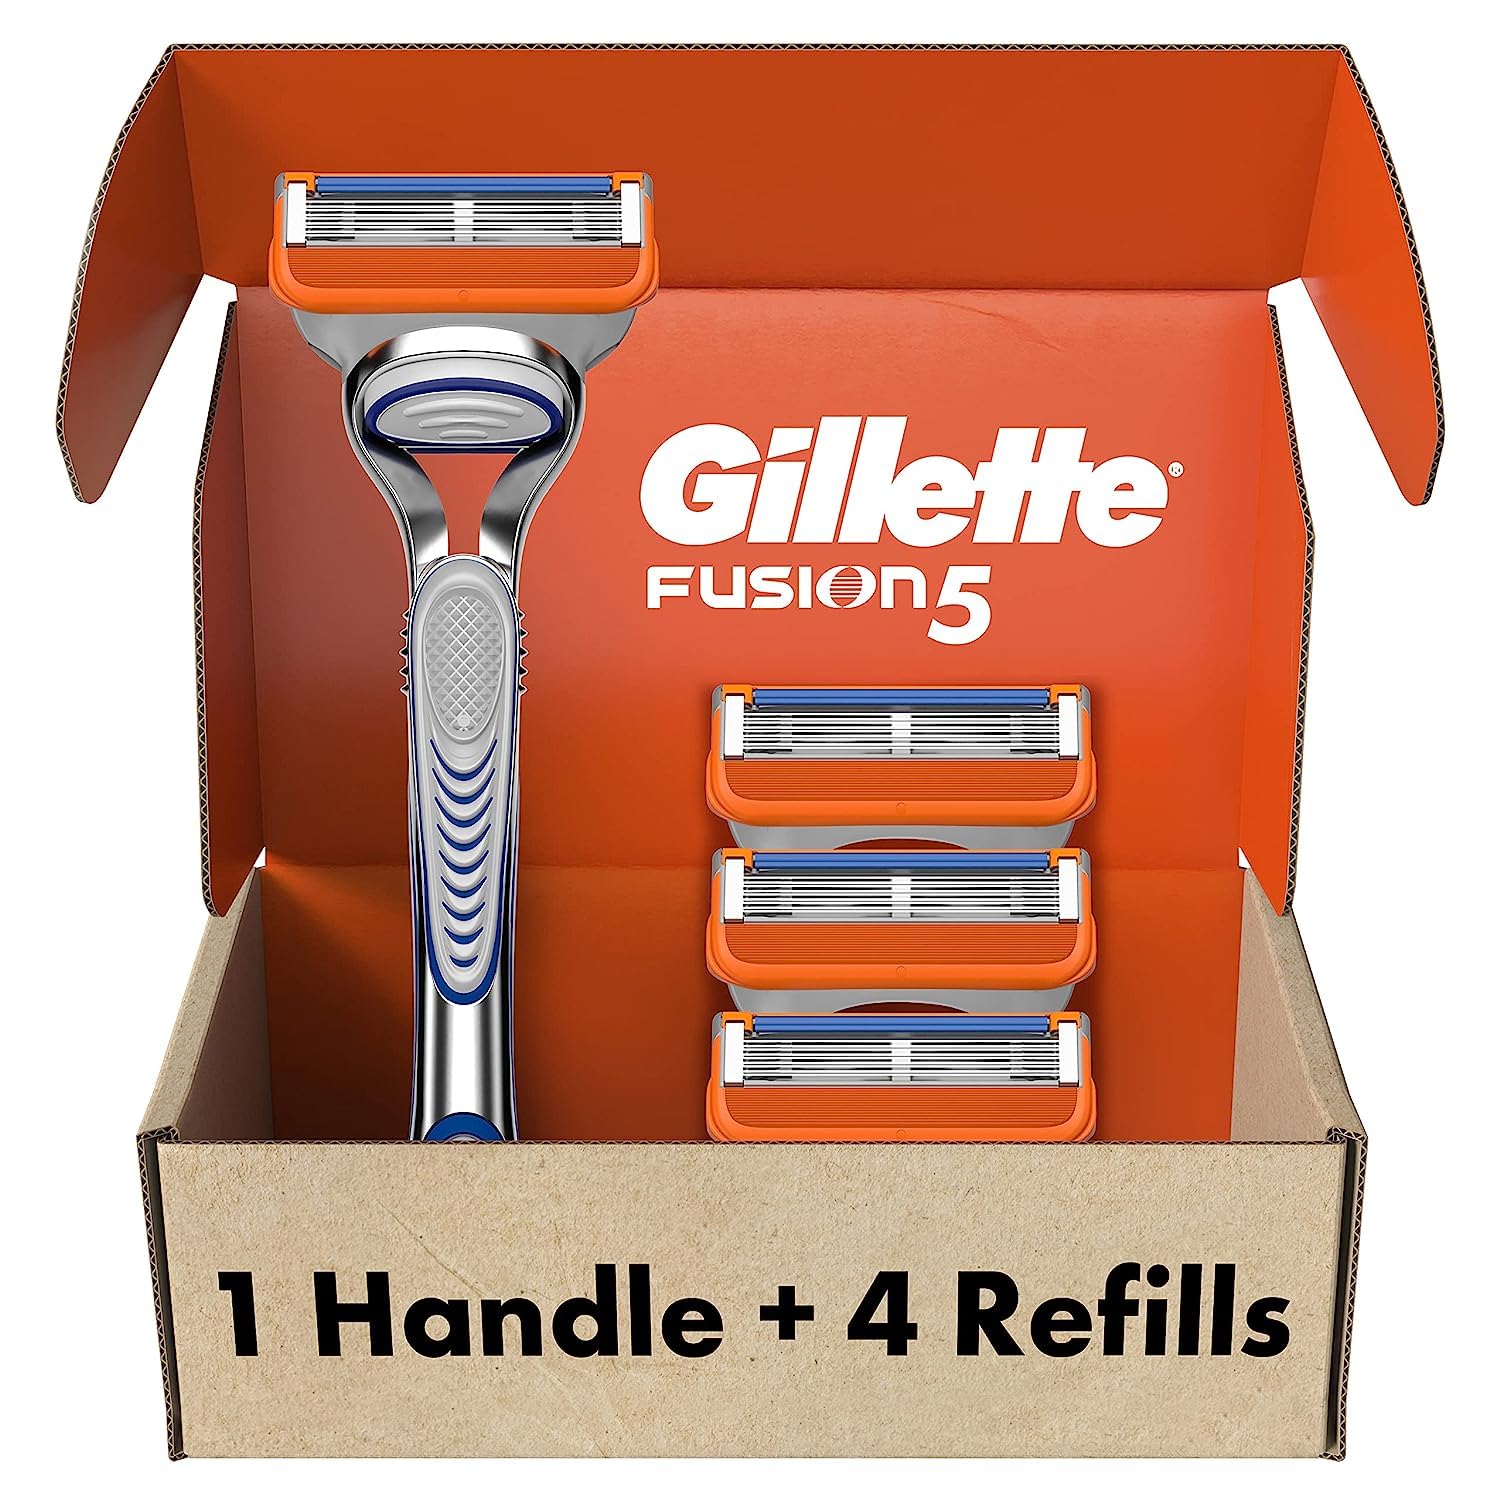 Gillette Fusion5 Razors for Men, 1 Razor, 4 Blade Refills, Lubrastrip for a More Comfortable Shave